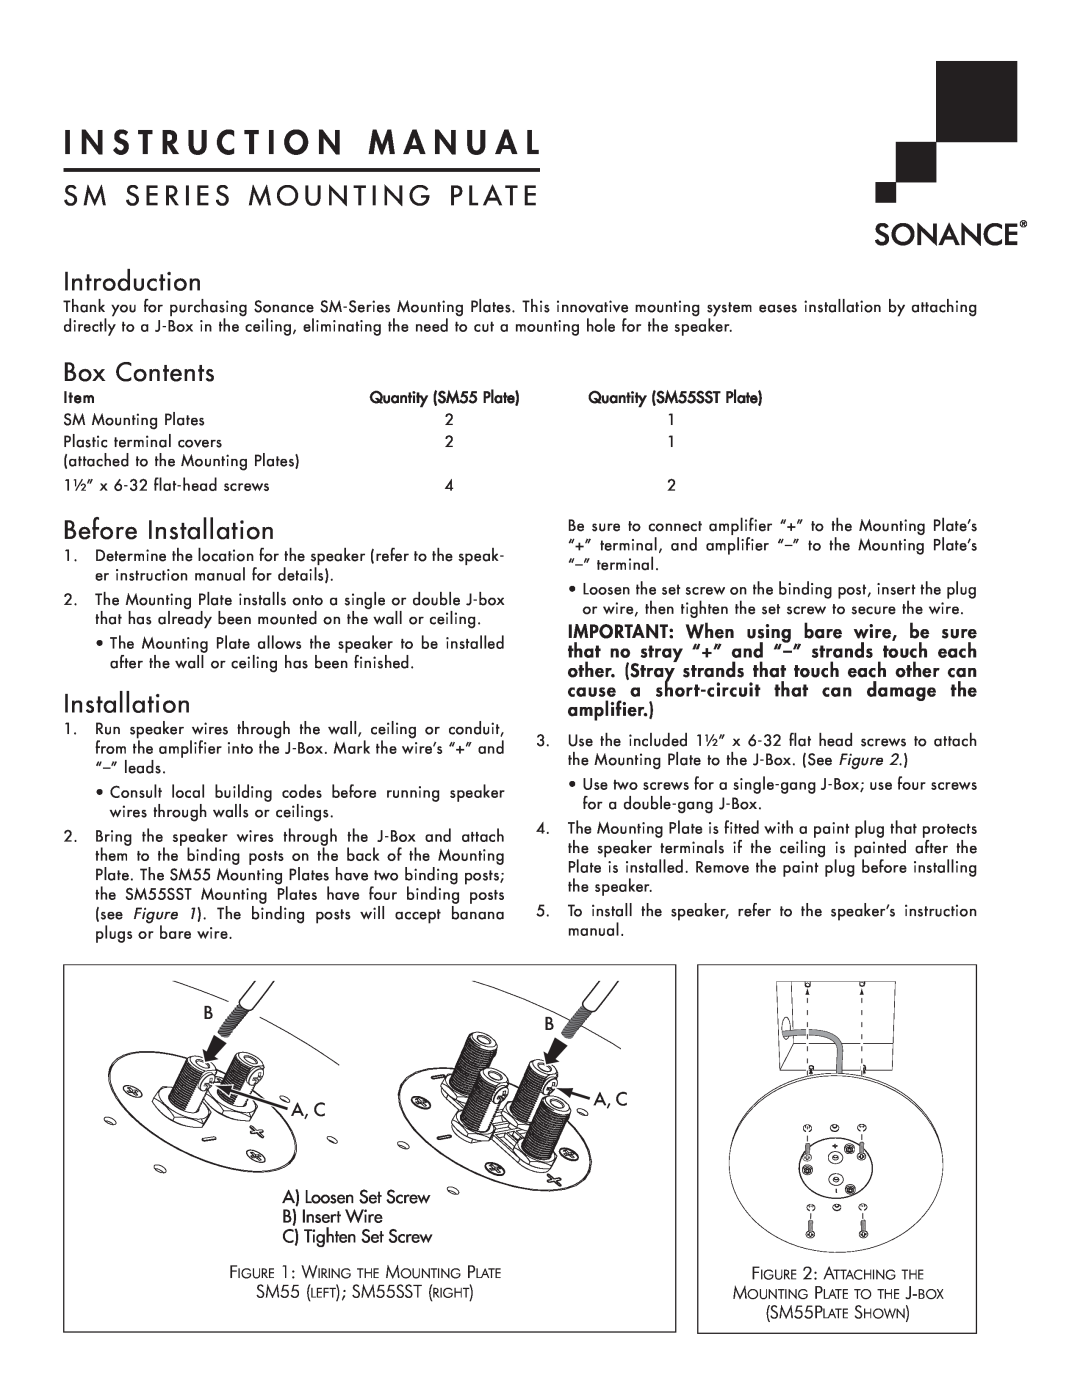 Sonance SM-Series instruction manual Introduction, Box Contents, Before Installation, I N S T R U C T I O N M A N U A L 